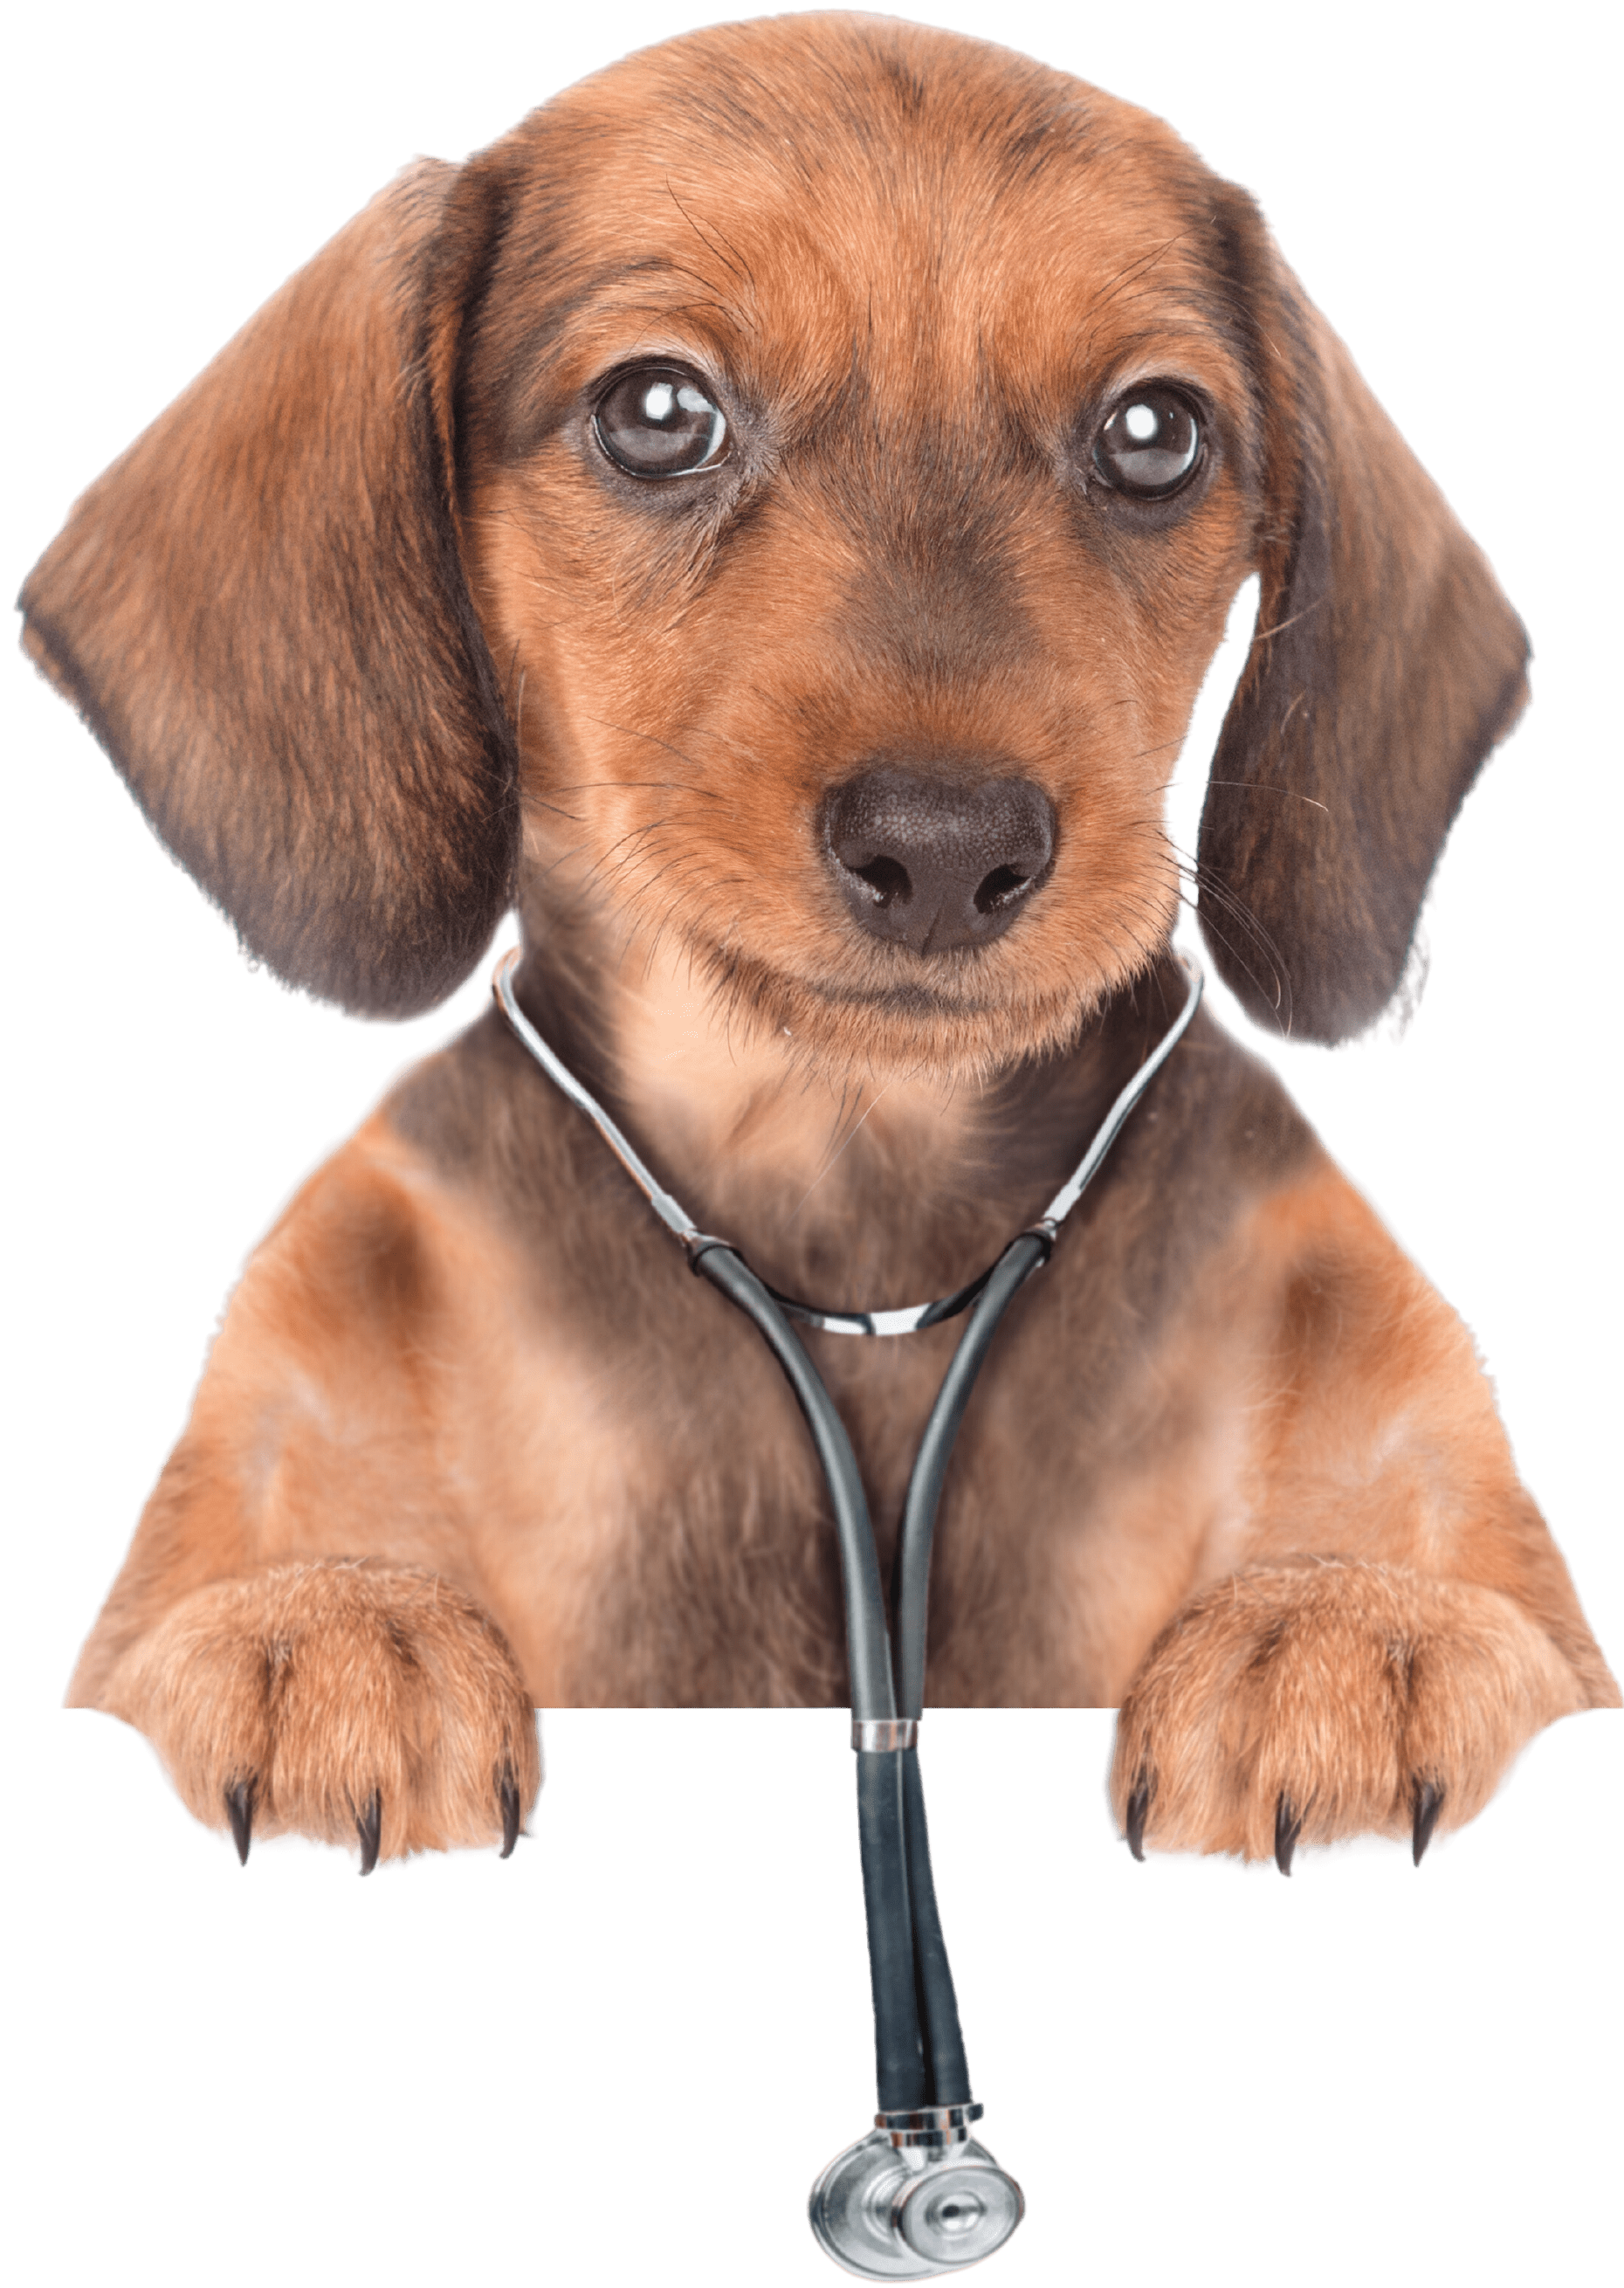 Puppy wearing a stethoscope